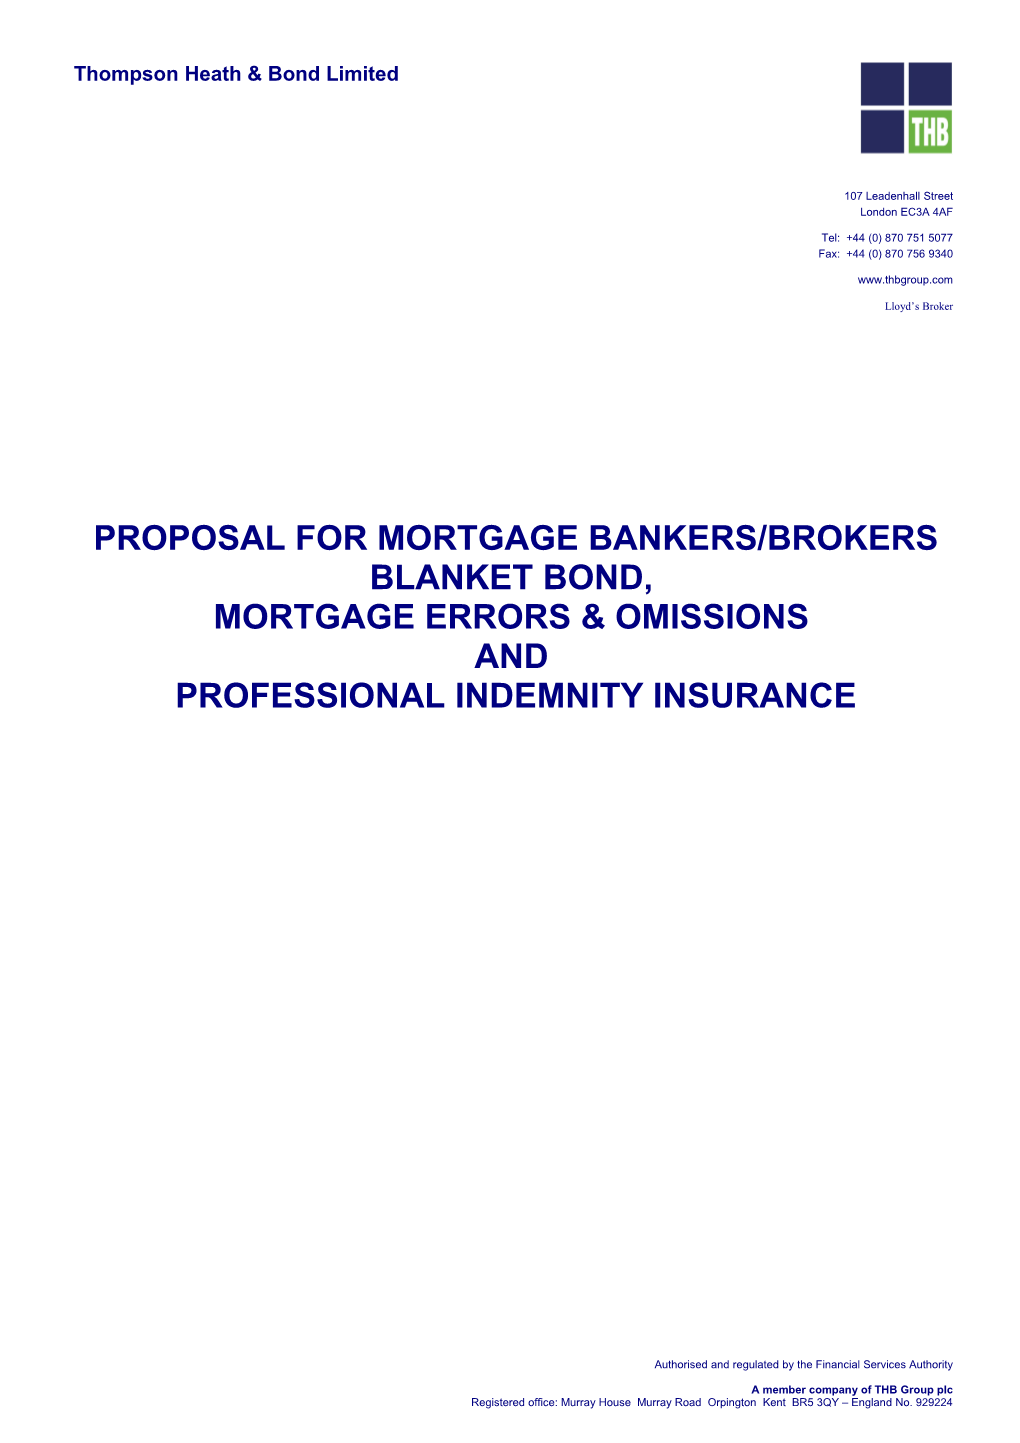 Proposal for Mortgage Bankers/Brokers Blanket Bond